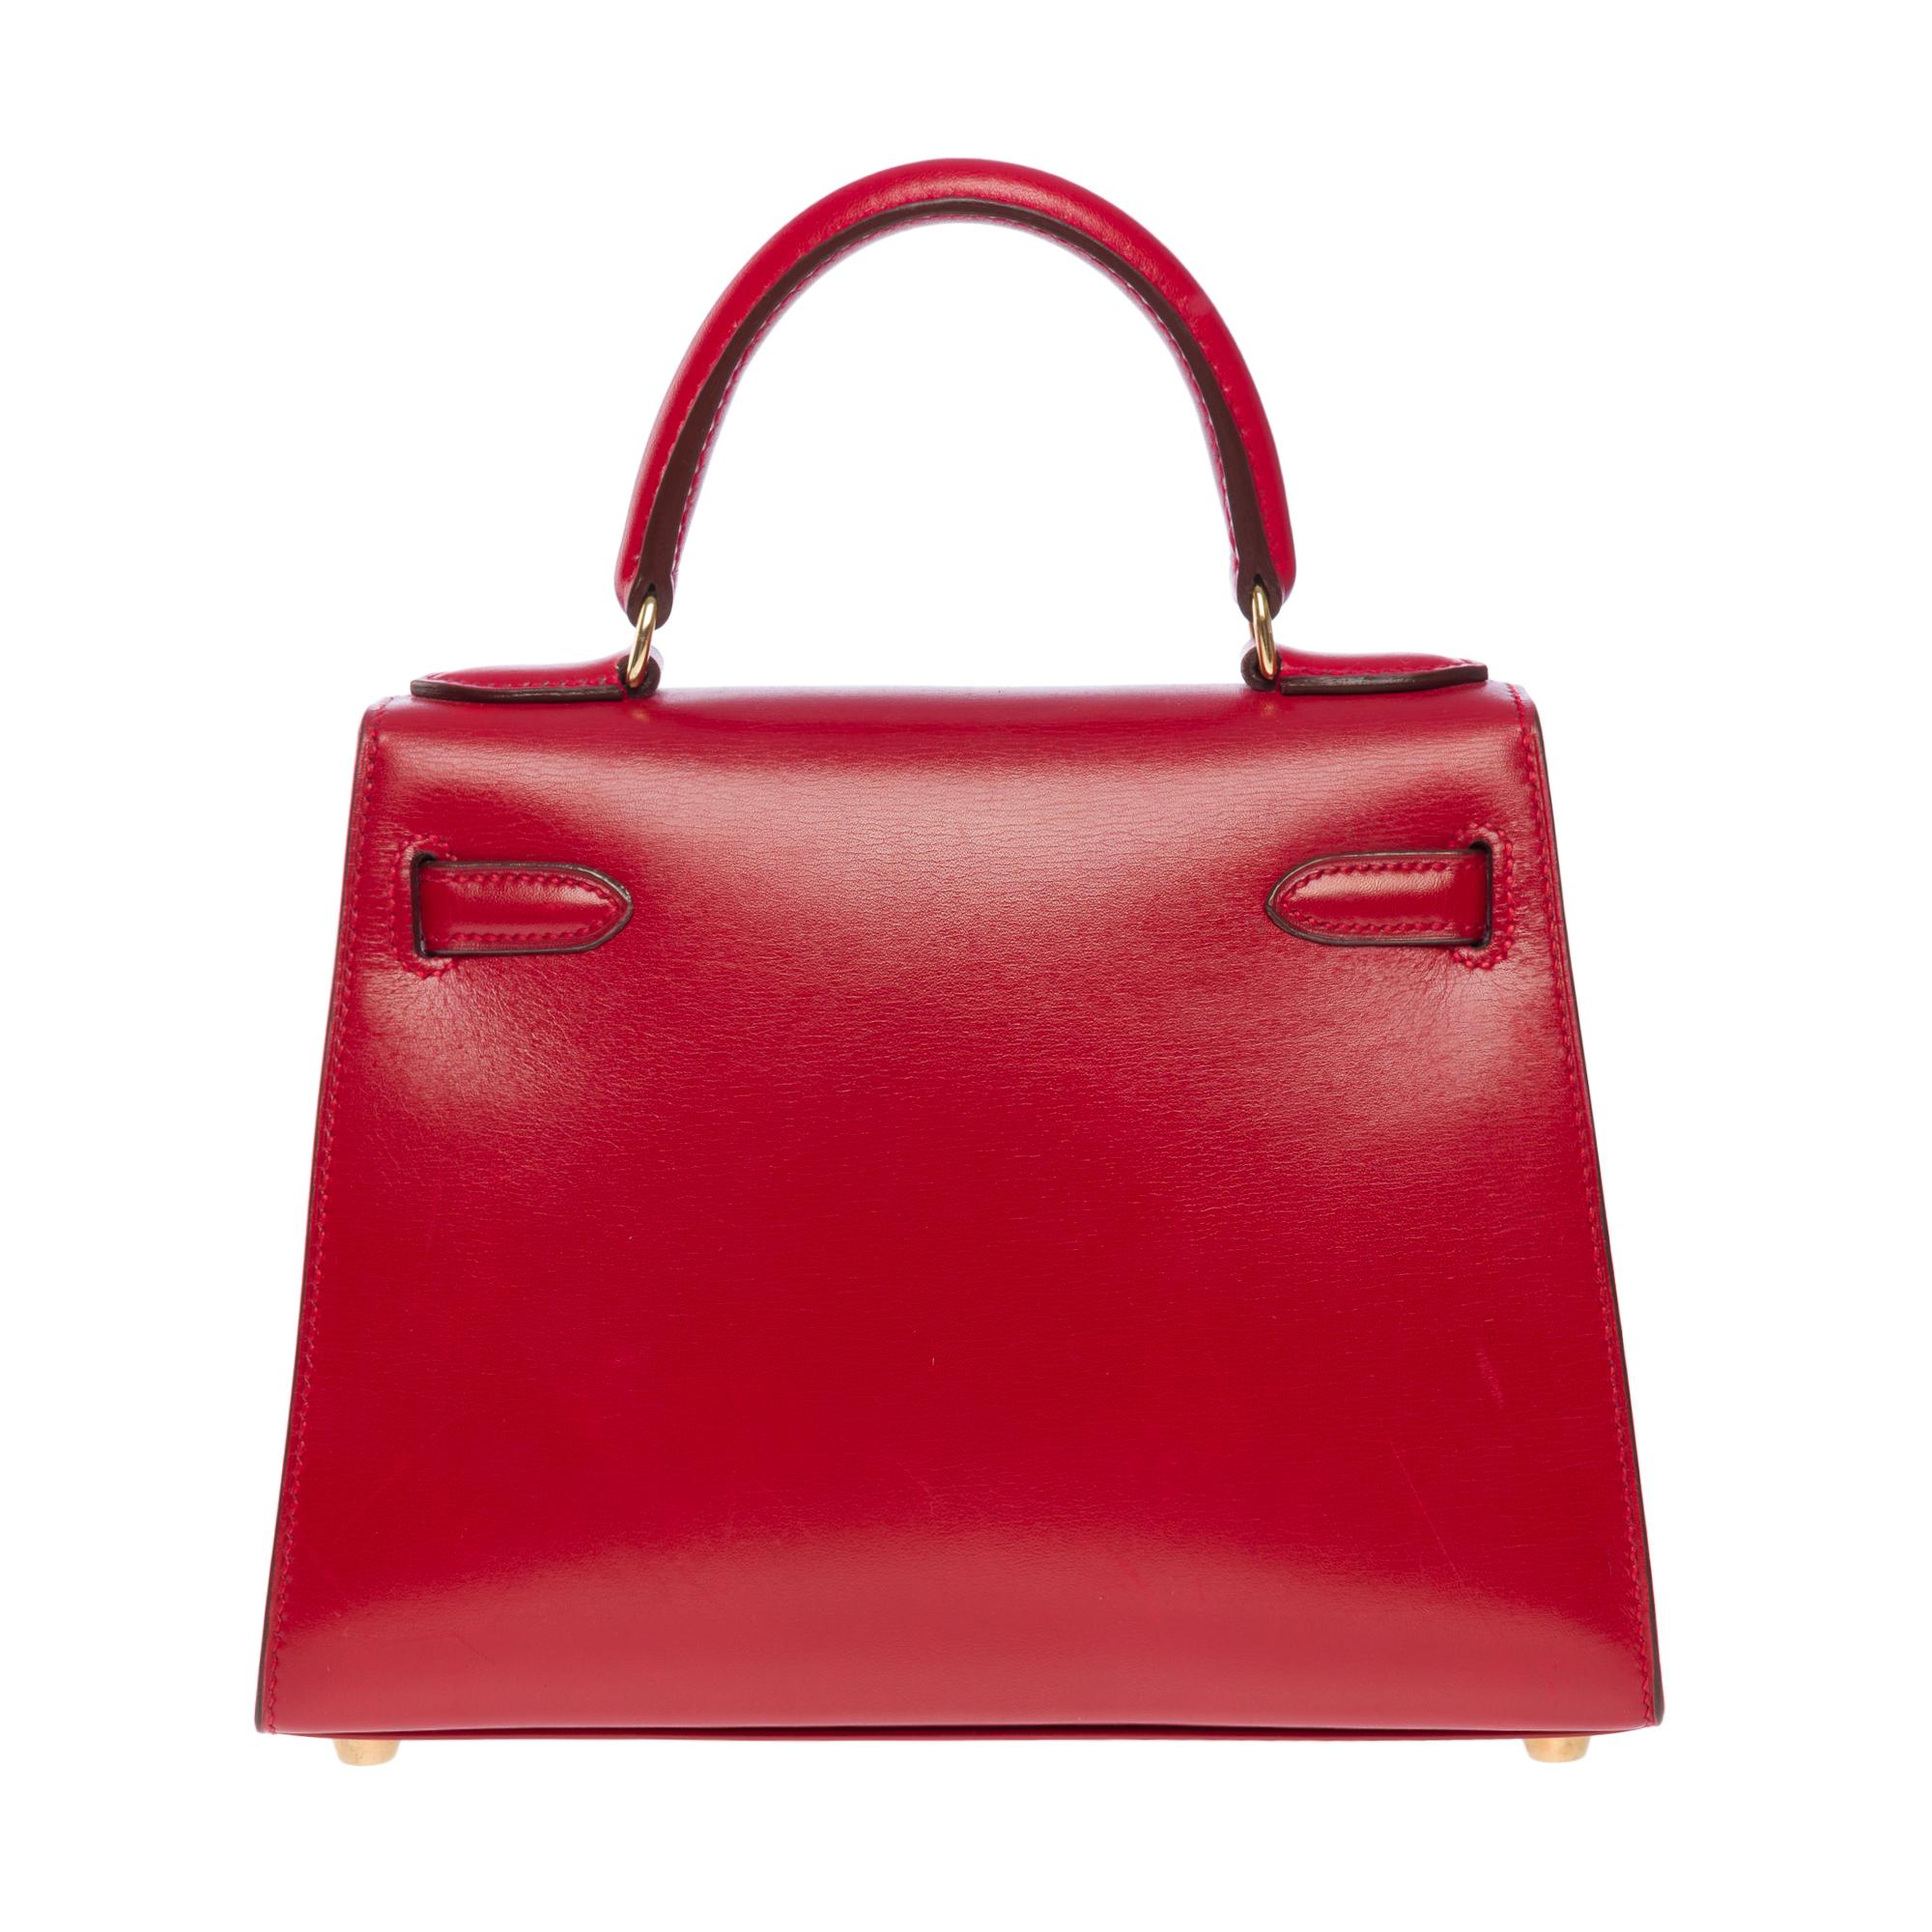 Women's Rare Hermès Mini Kelly 20cm handbag double strap in Red H box calfskin, GHW For Sale